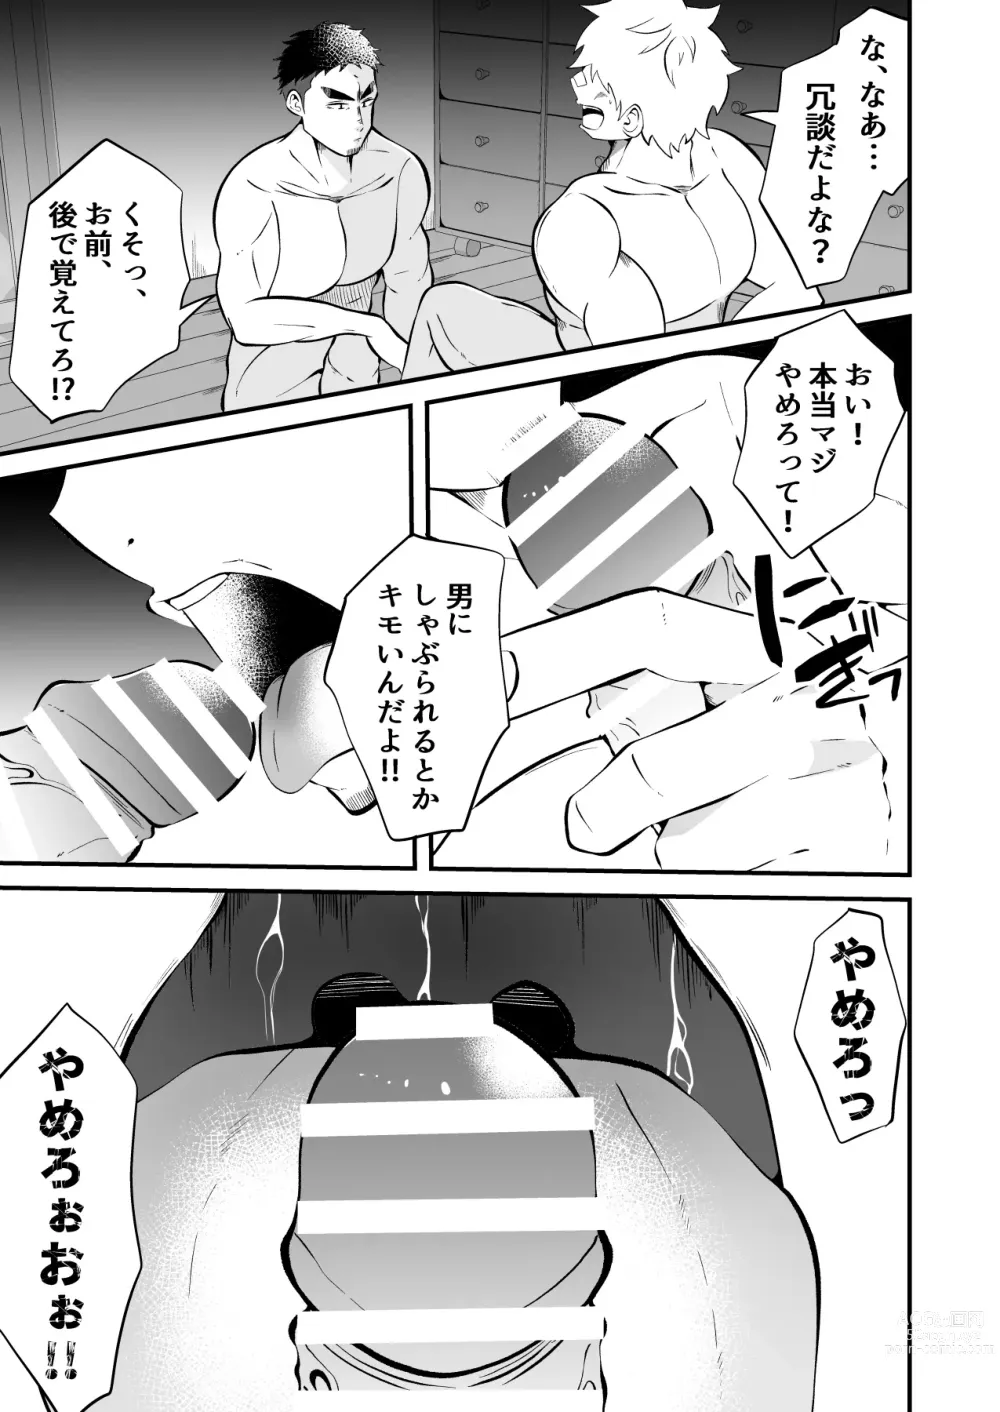 Page 26 of doujinshi Ochite iku ragaman sennou